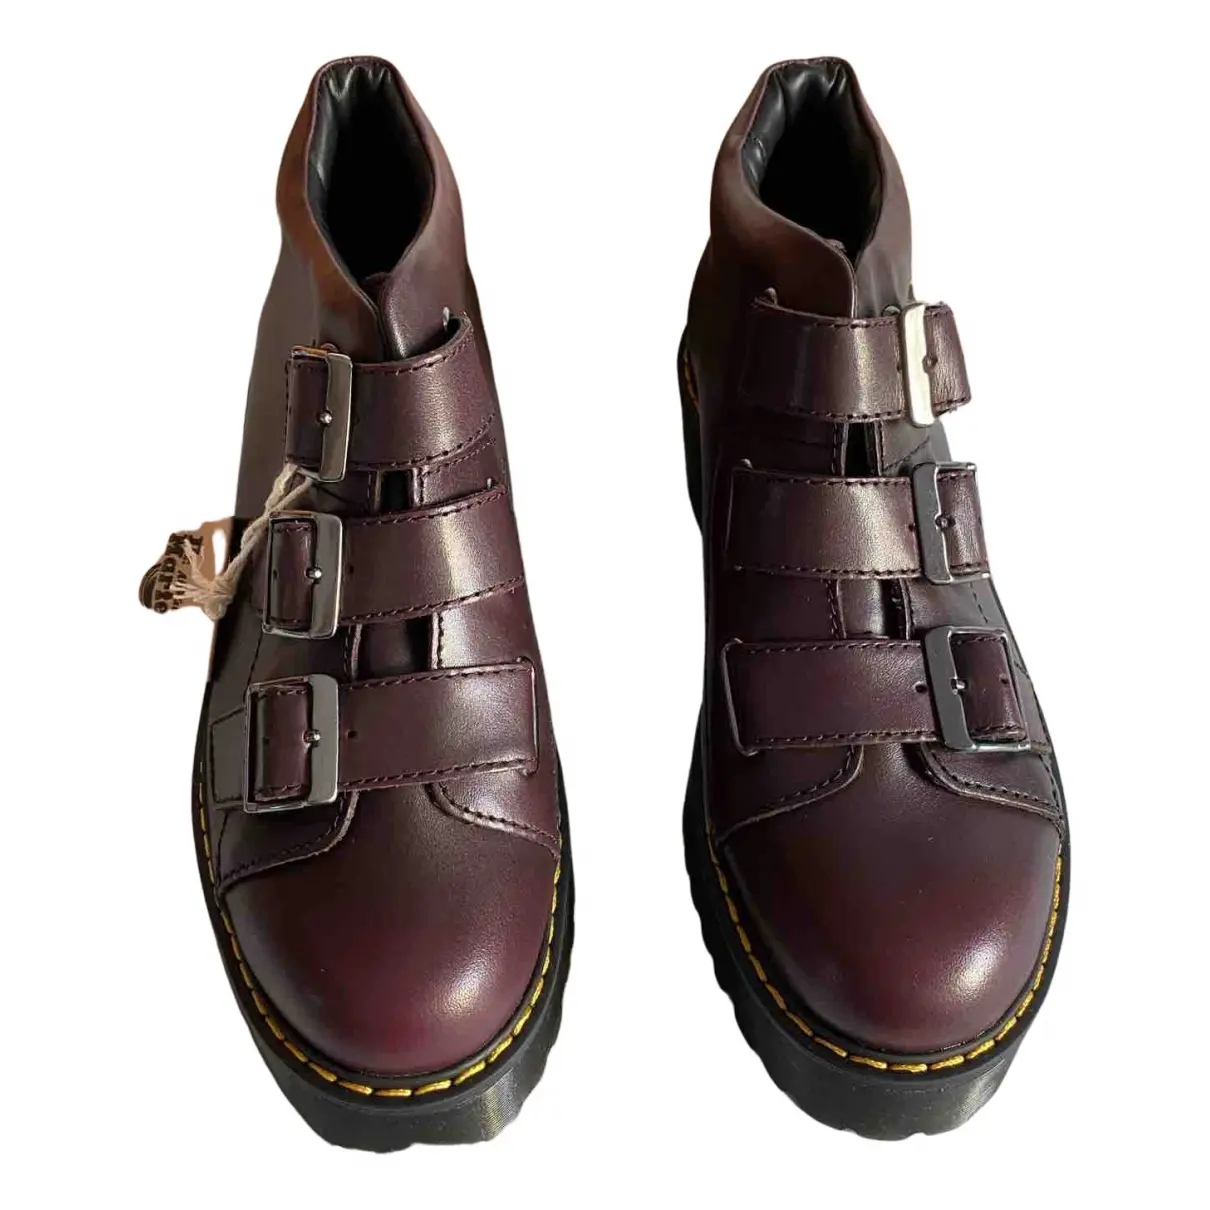 Buy Dr. Martens Burgundy Leather Boots online